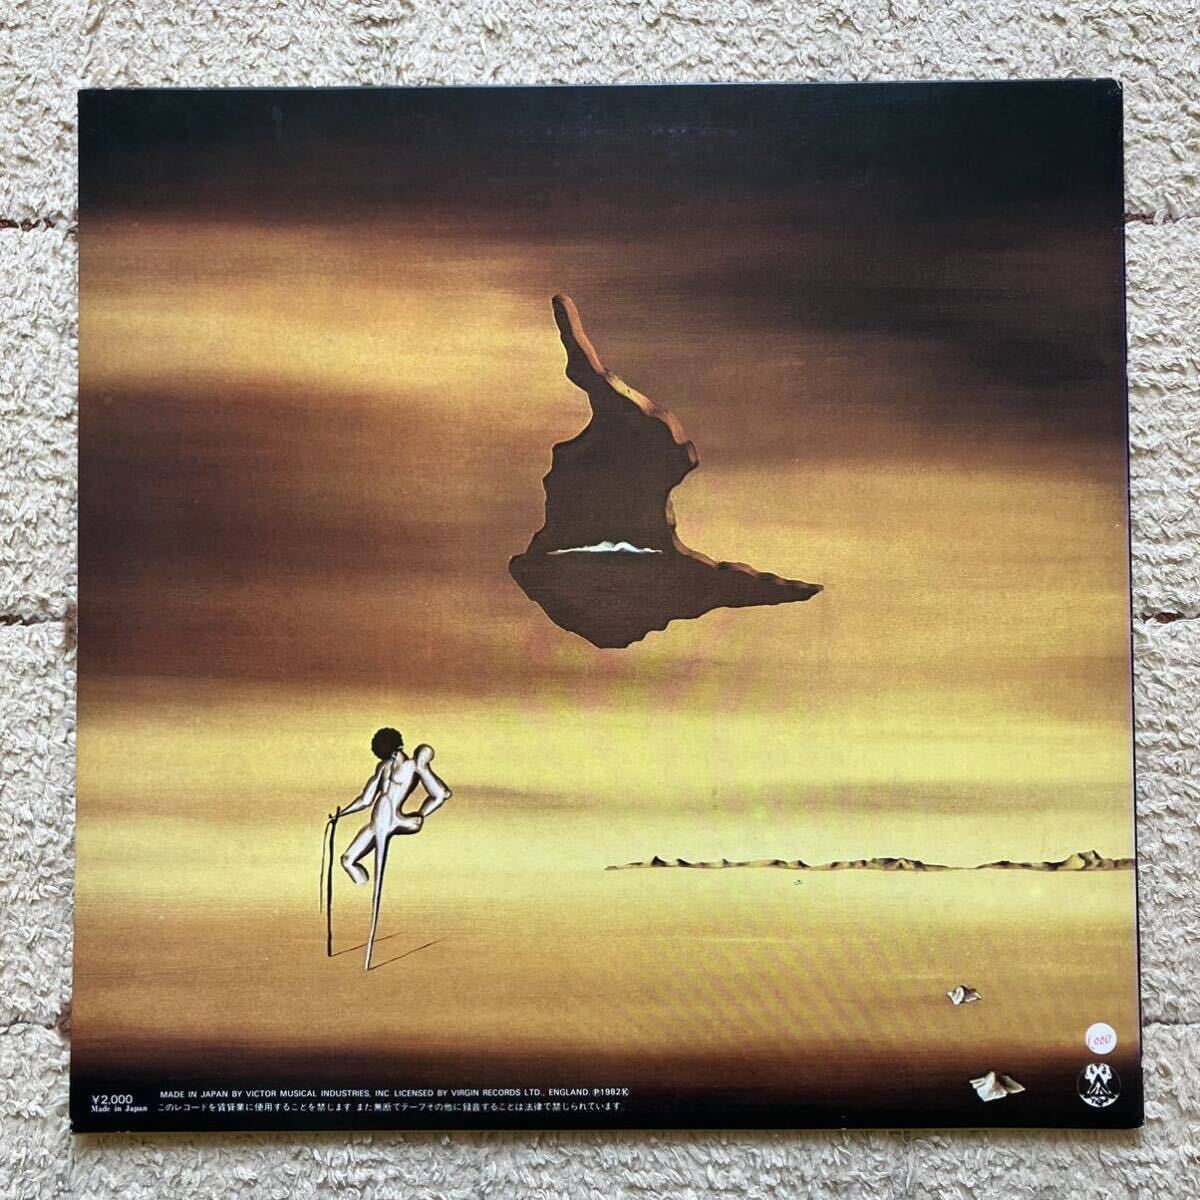 LP◆Klaus Schulze(クラウス・シュルツ)「Blackdance(ブラック・ダンス)」◆1982年 VIP-4173◆Experimental Ambient Tangerine Dream_画像2